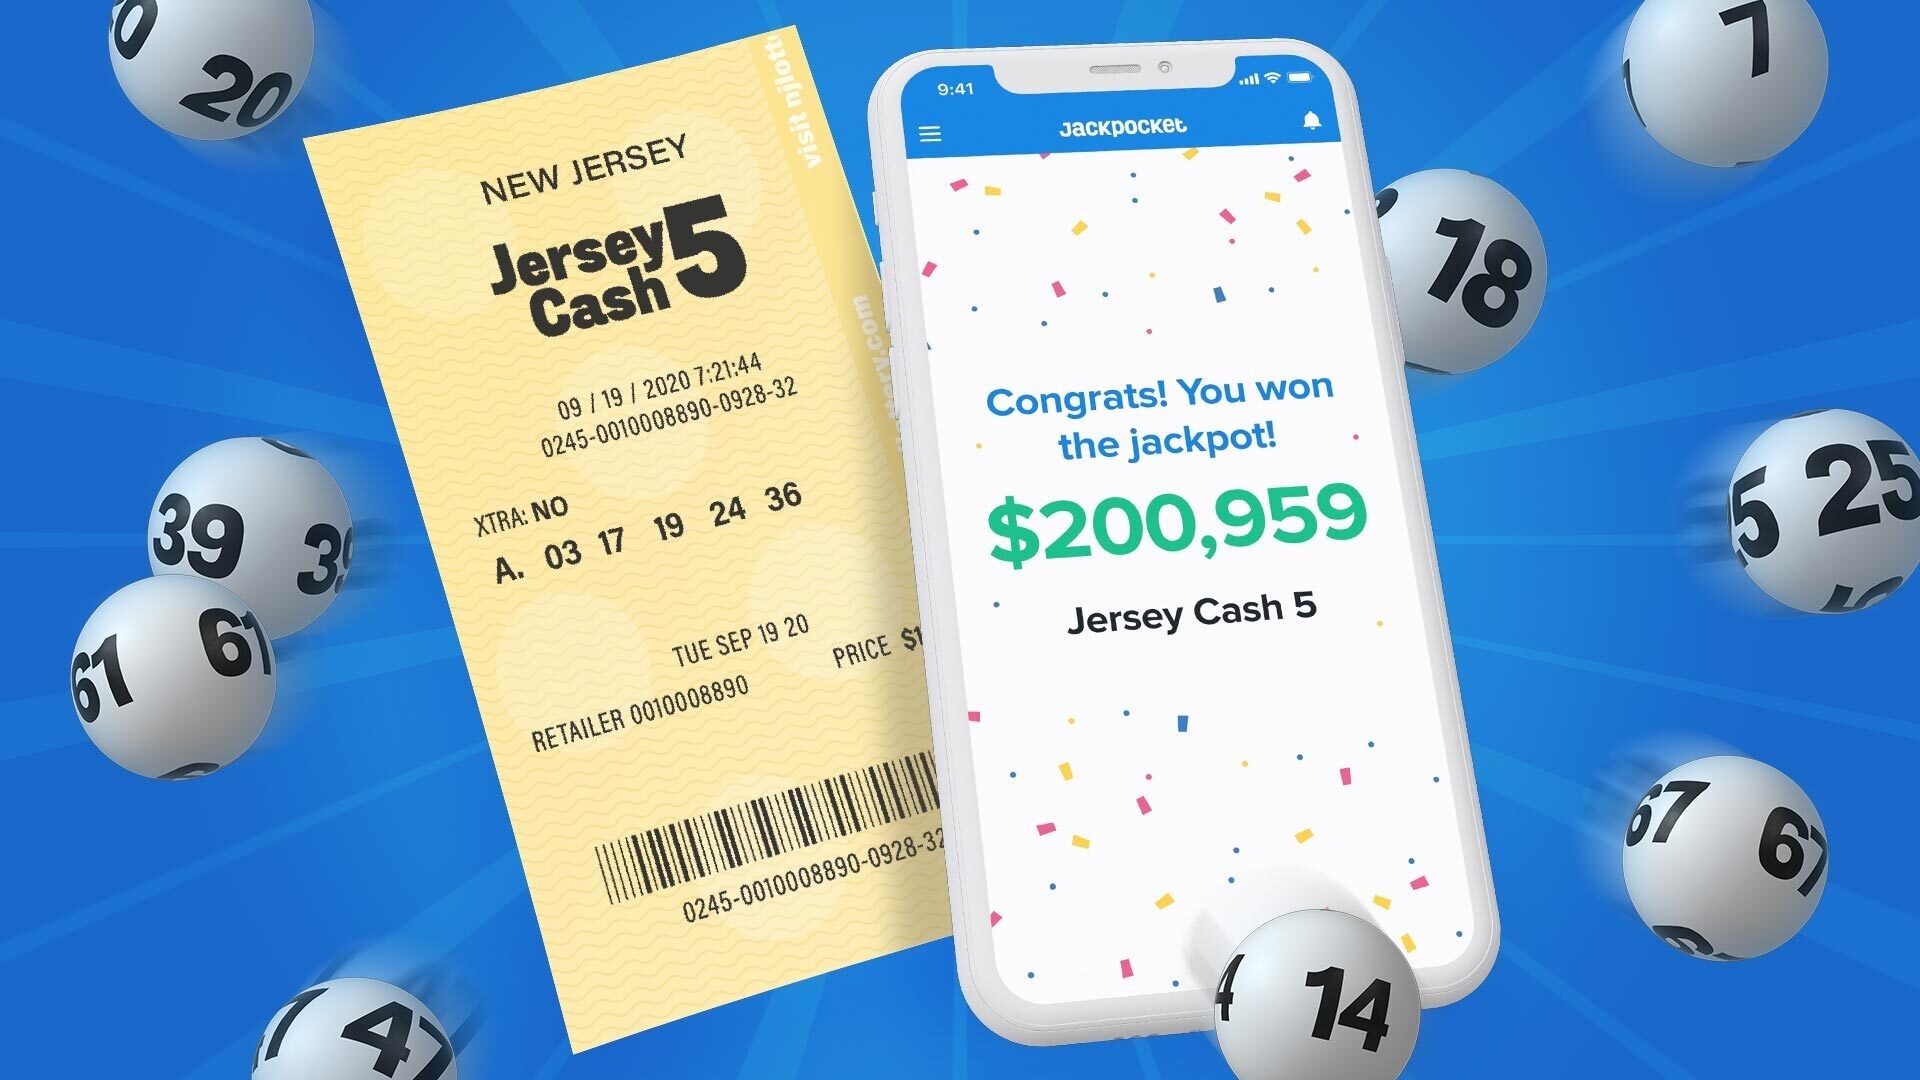 Middlesex County Man Wins 0 000 Jersey Cash 5 Jackpot Using Lottery App